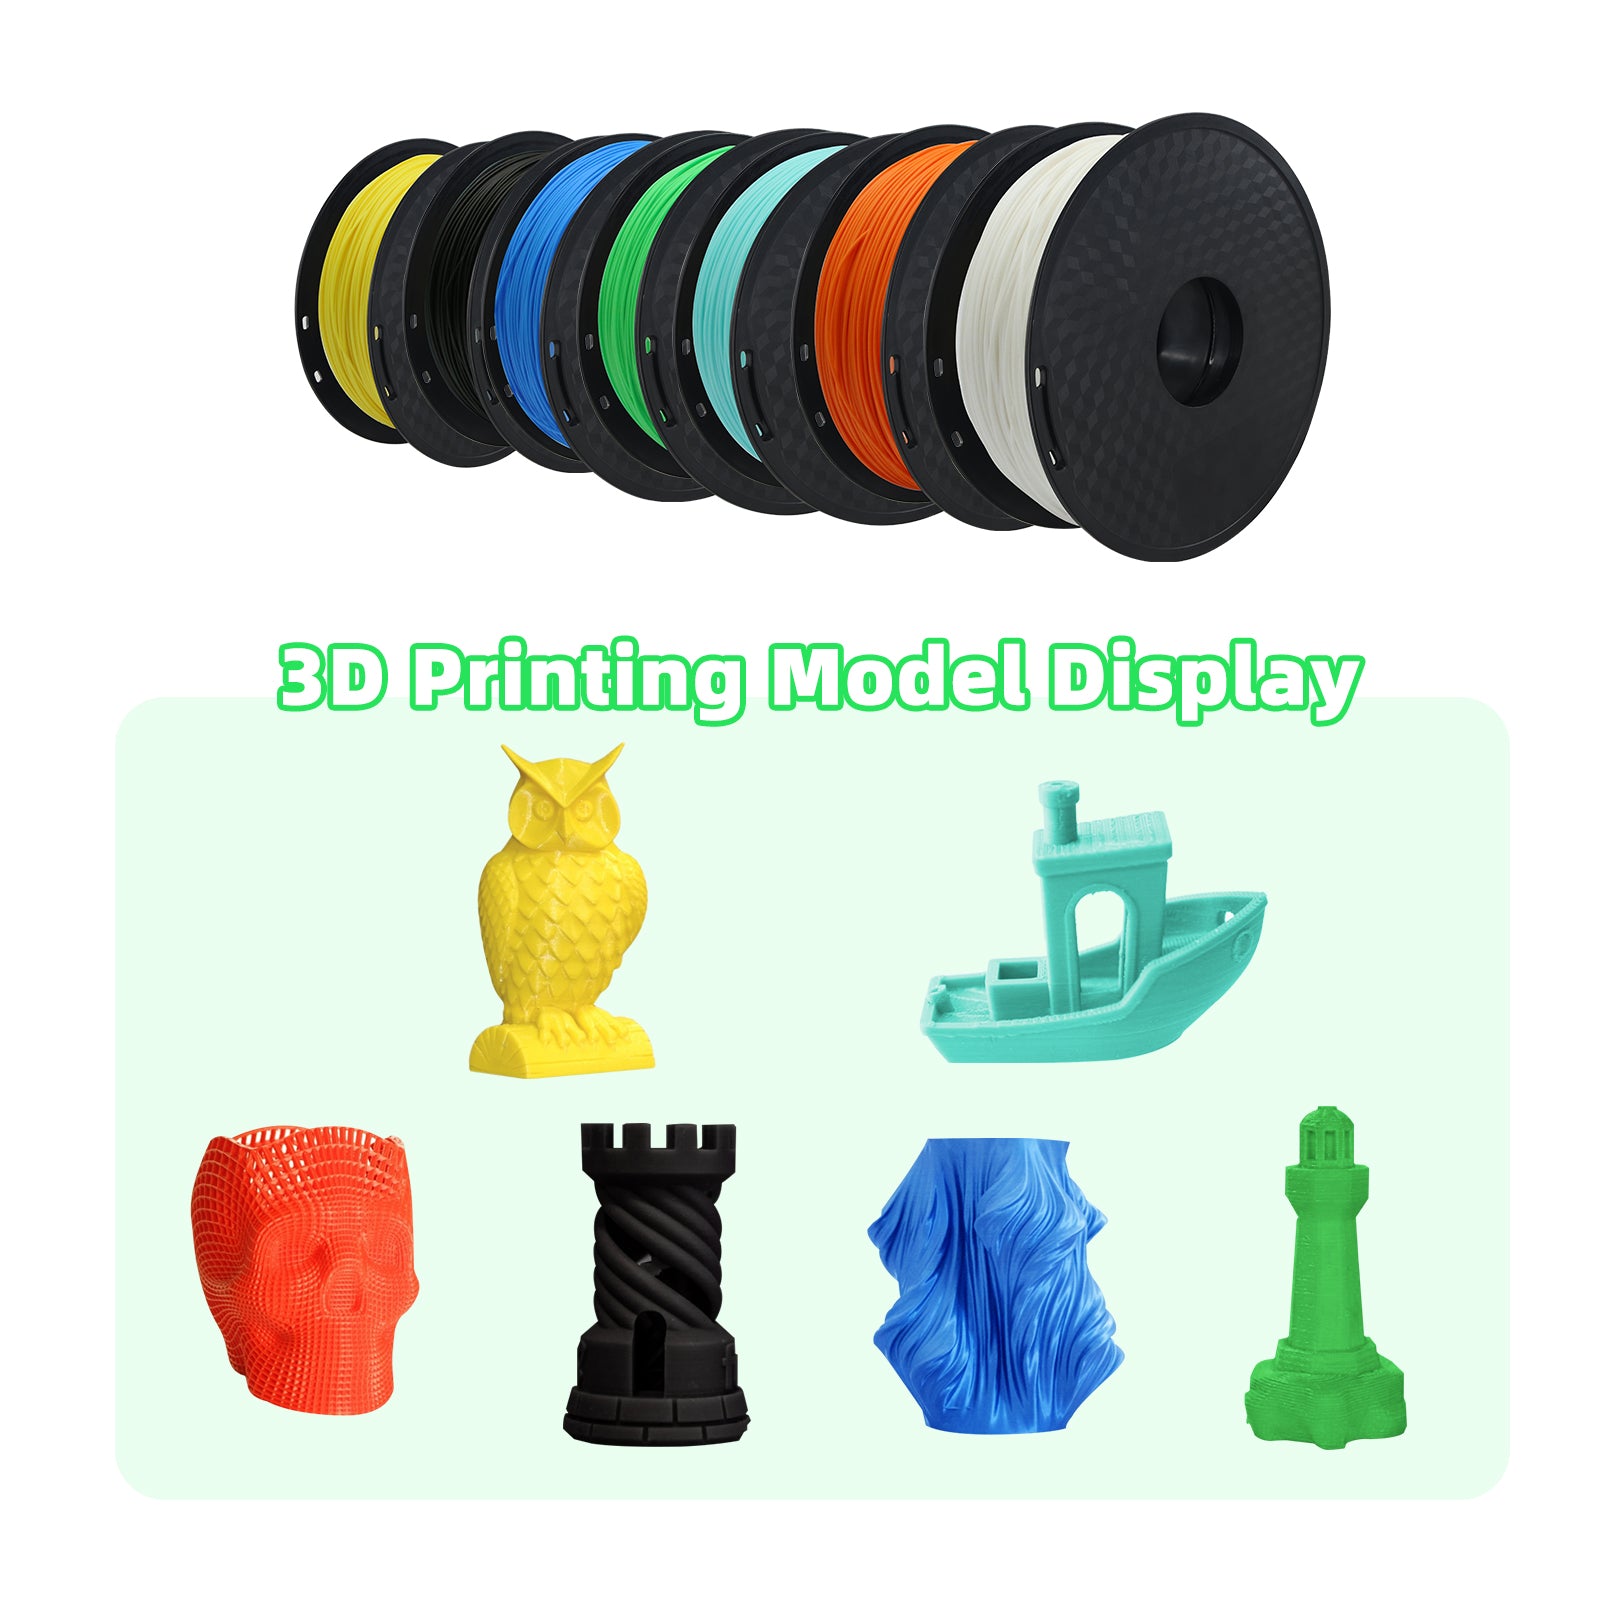 1kg Spool PLA Filament 1.75mm diameter printing consumables suitable for most FDM 3D printers Orange or Blue